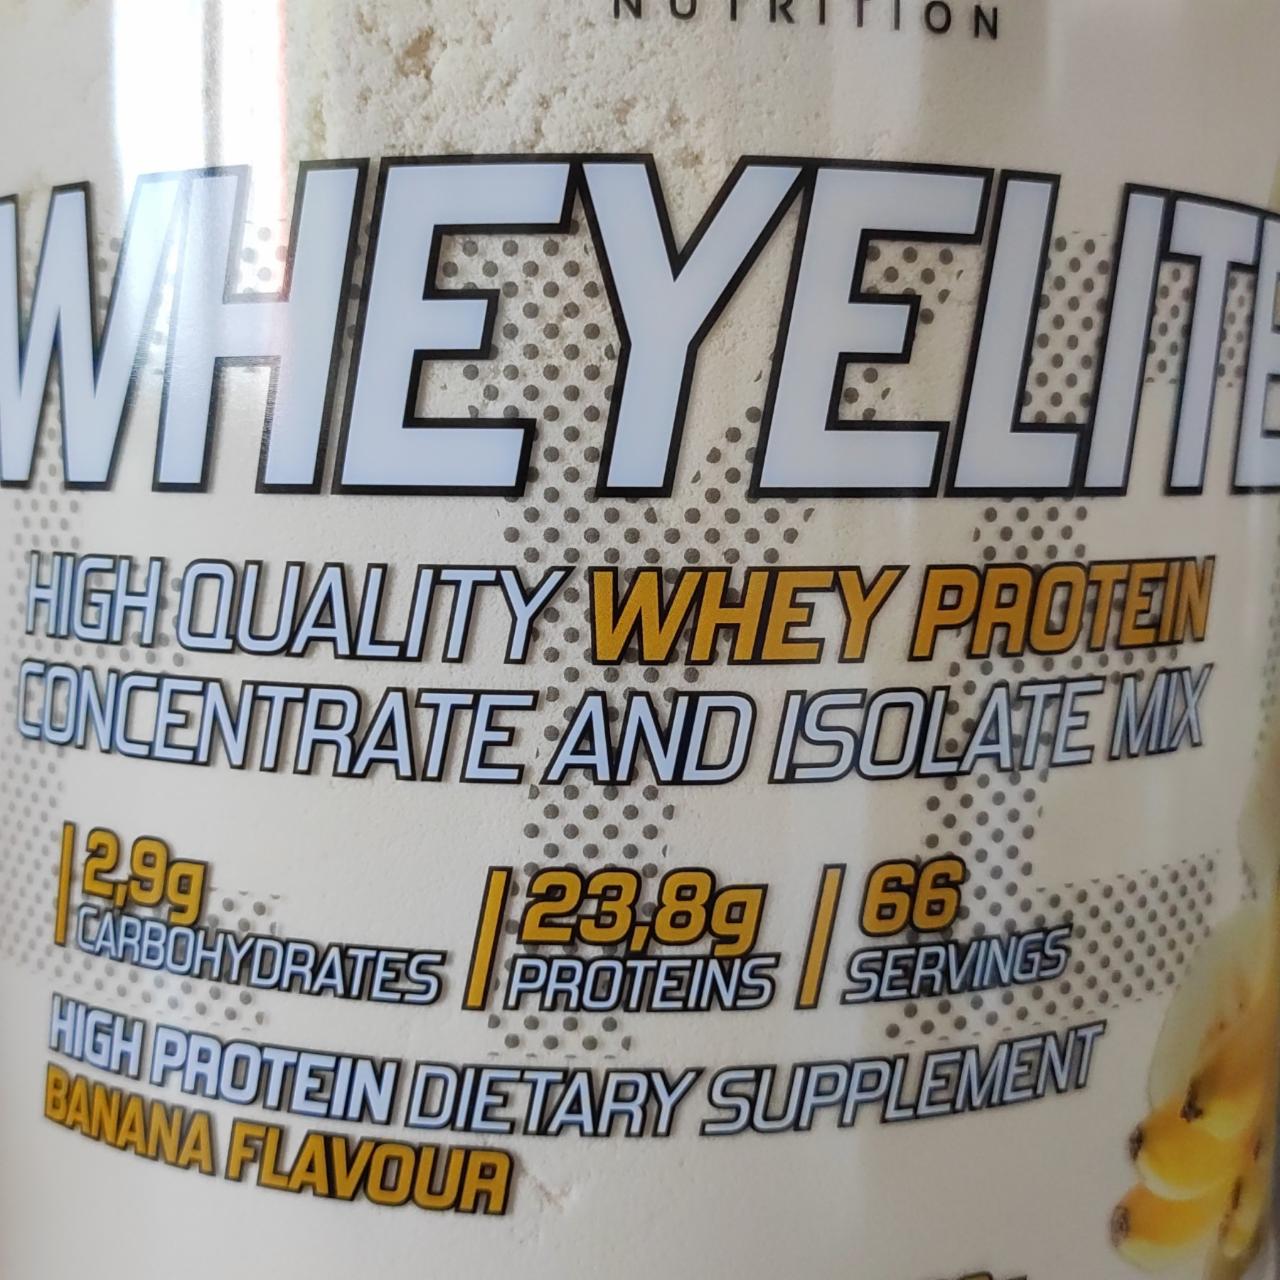 Fotografie - Wheyelite Banana flavour Evolite Nutrition